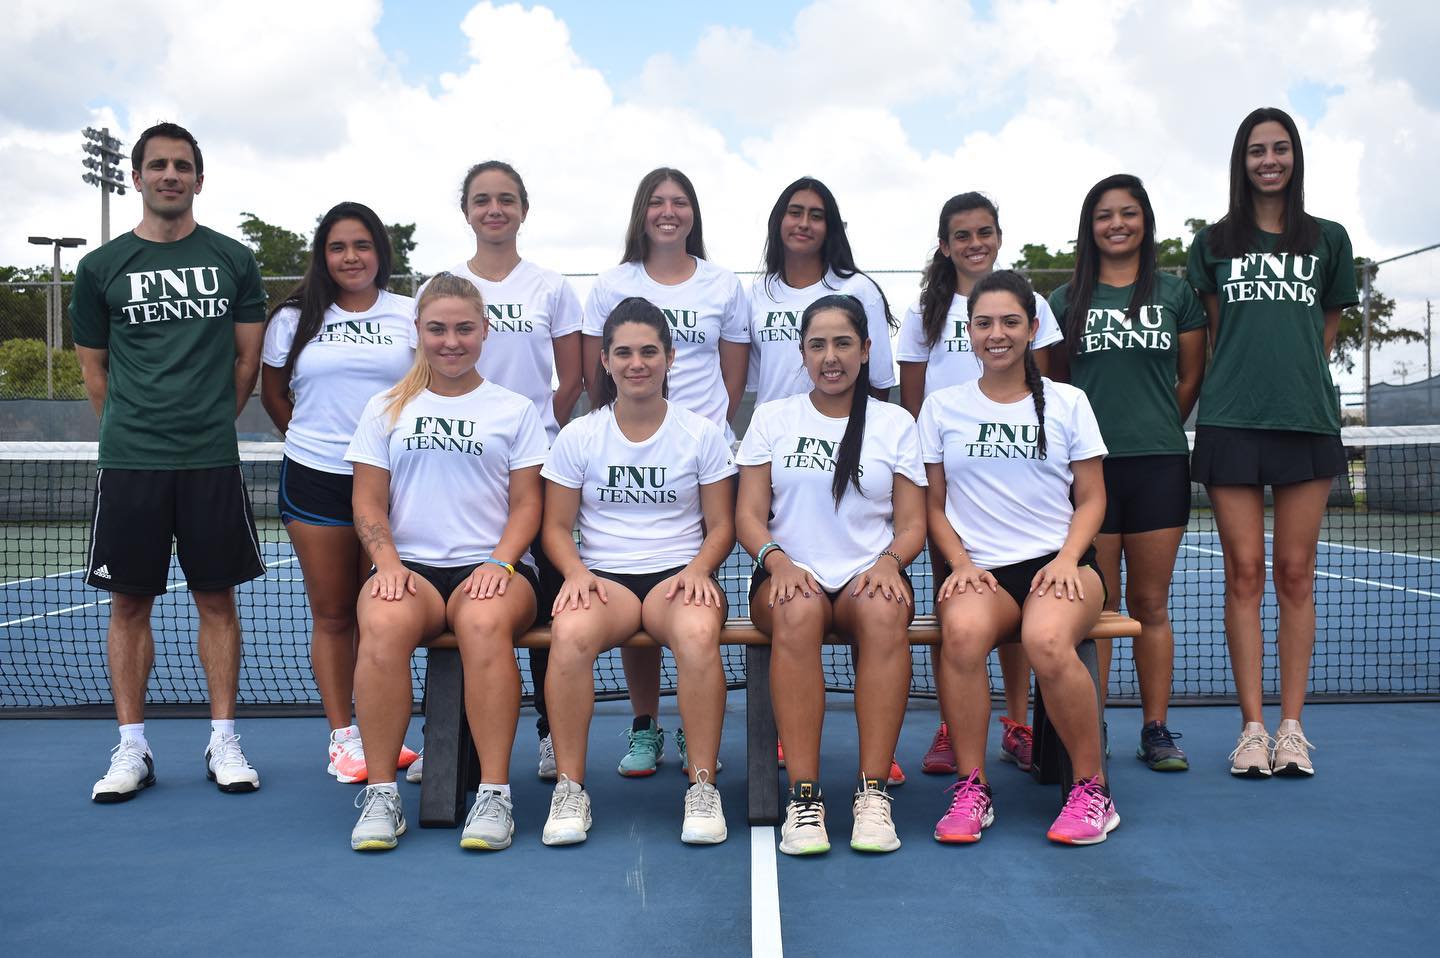 FNU Women's tennis team picture 